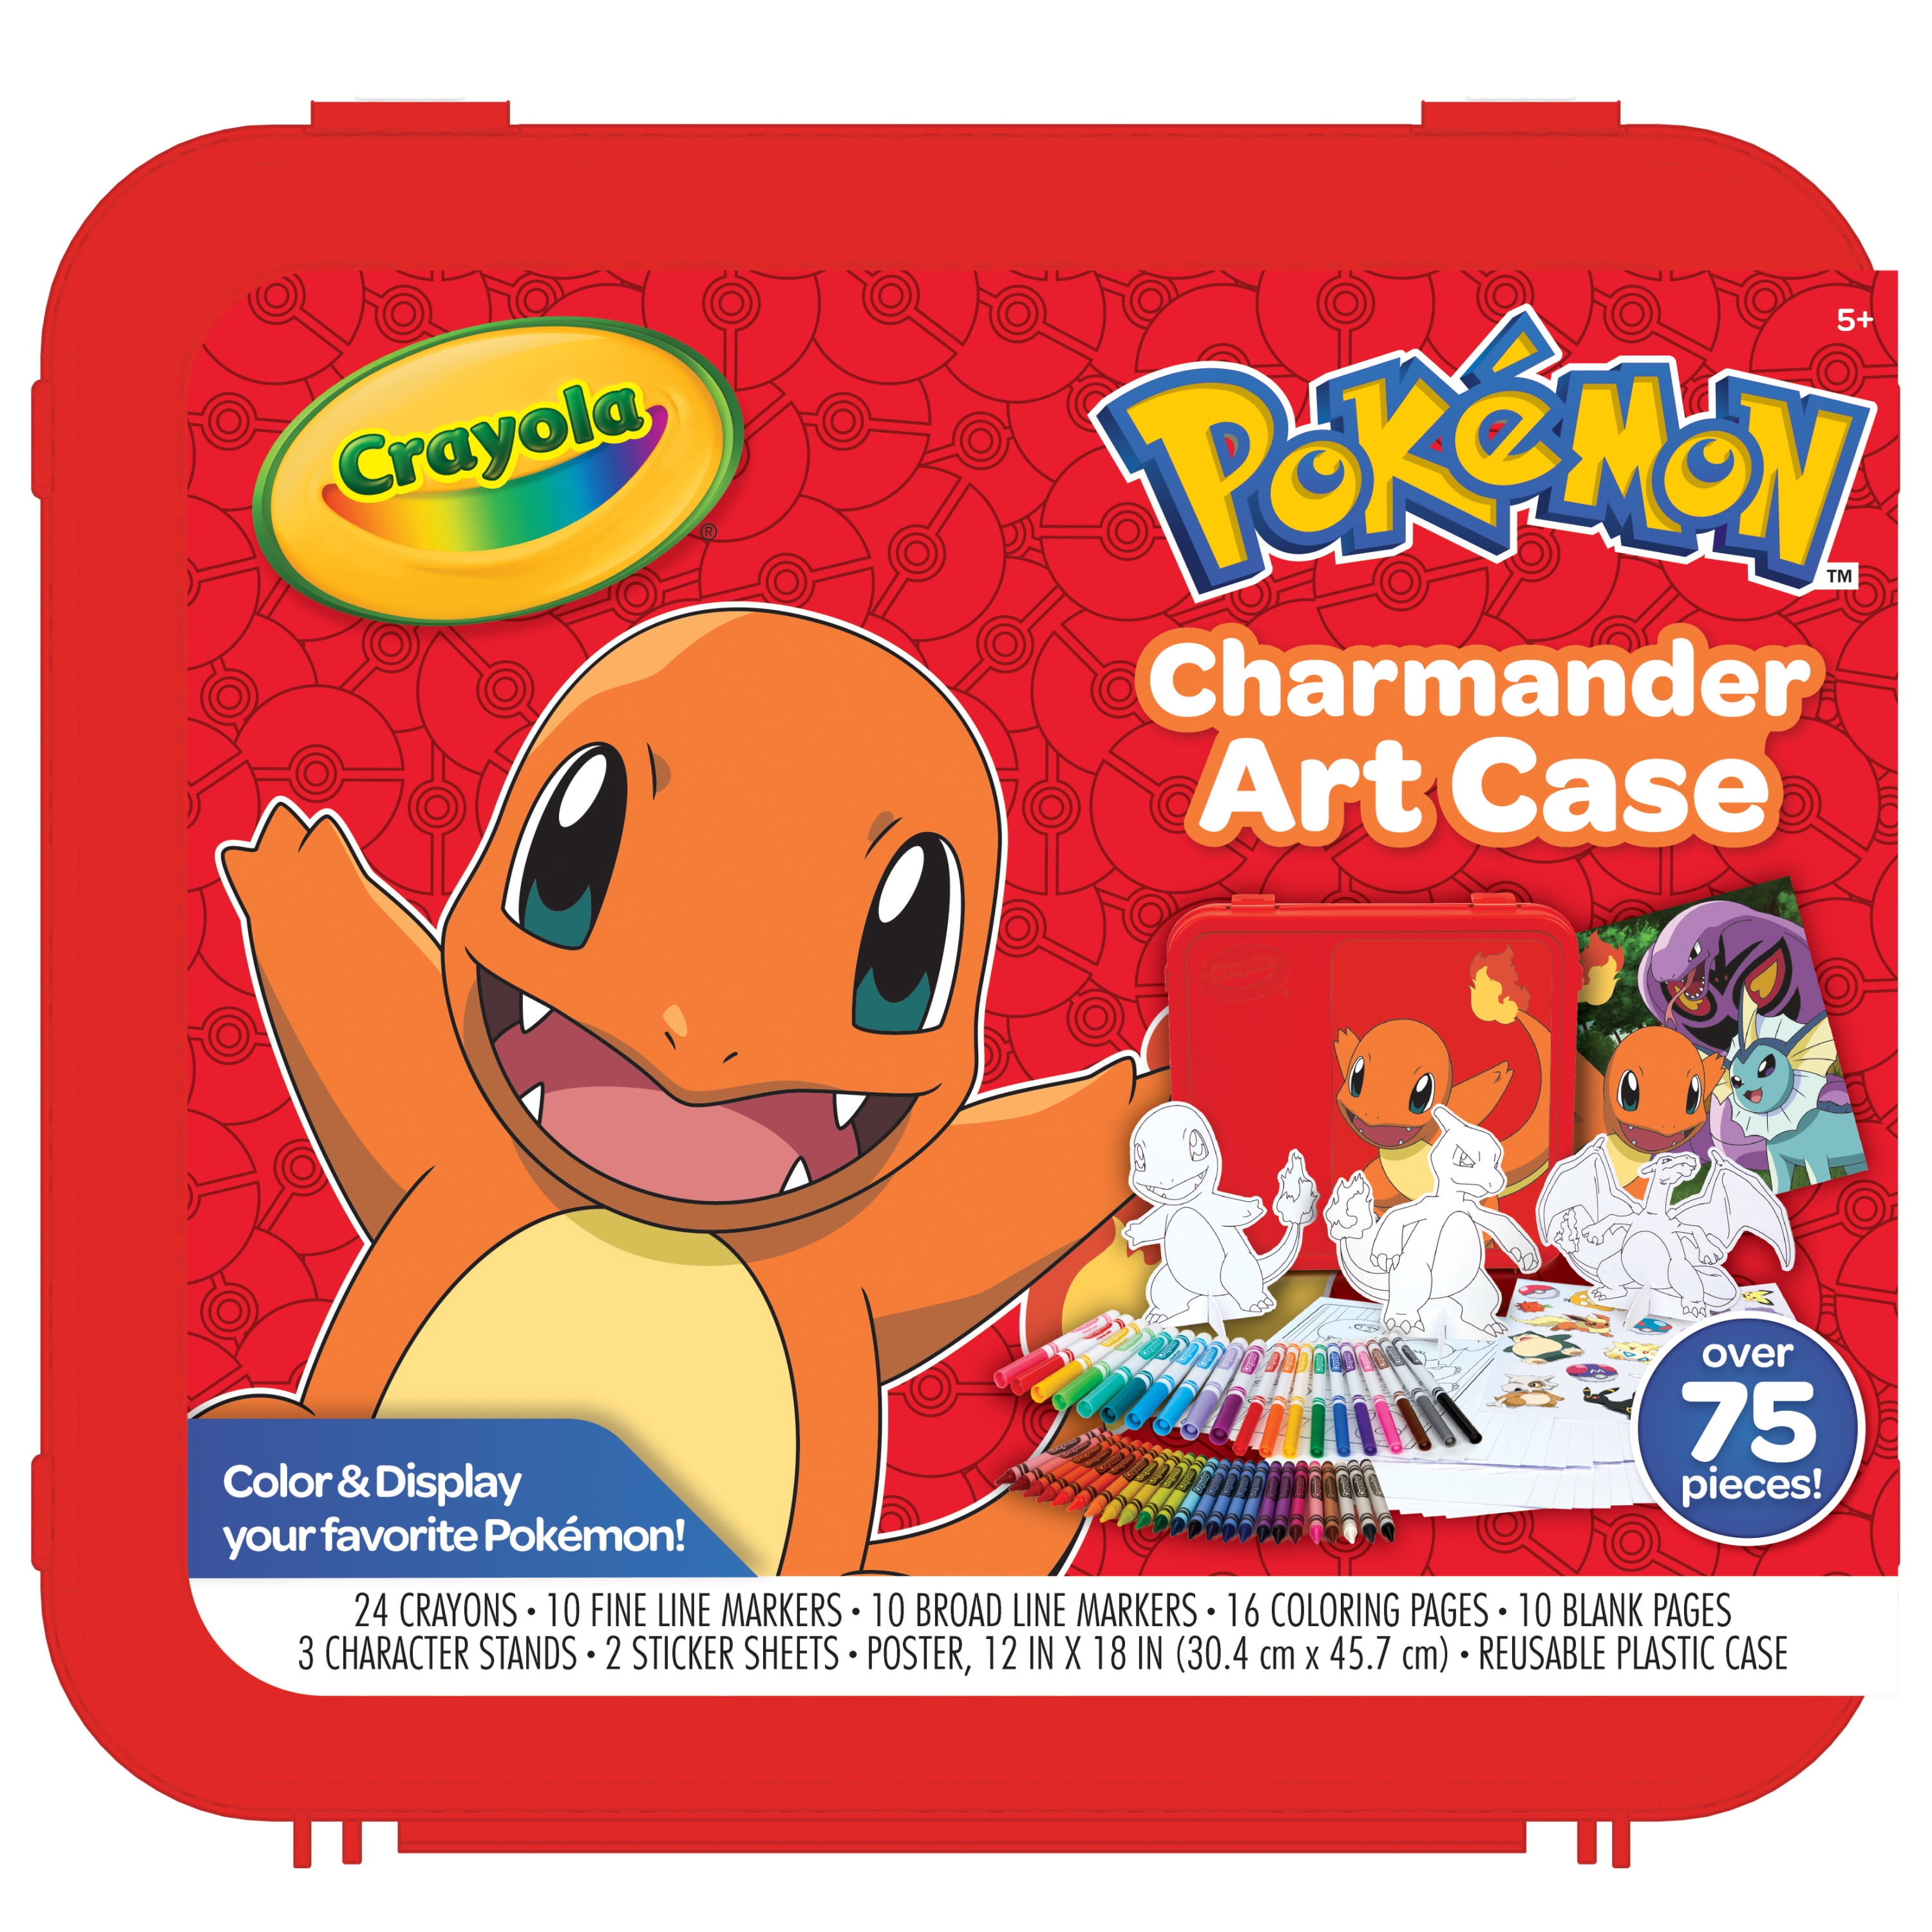  Crayola Pokémon Imagination Art Set (115pcs), Kids Art Kit,  Includes Pokemon Coloring Pages, Pokemon Gifts for Kids, Ages 5+ :  Everything Else